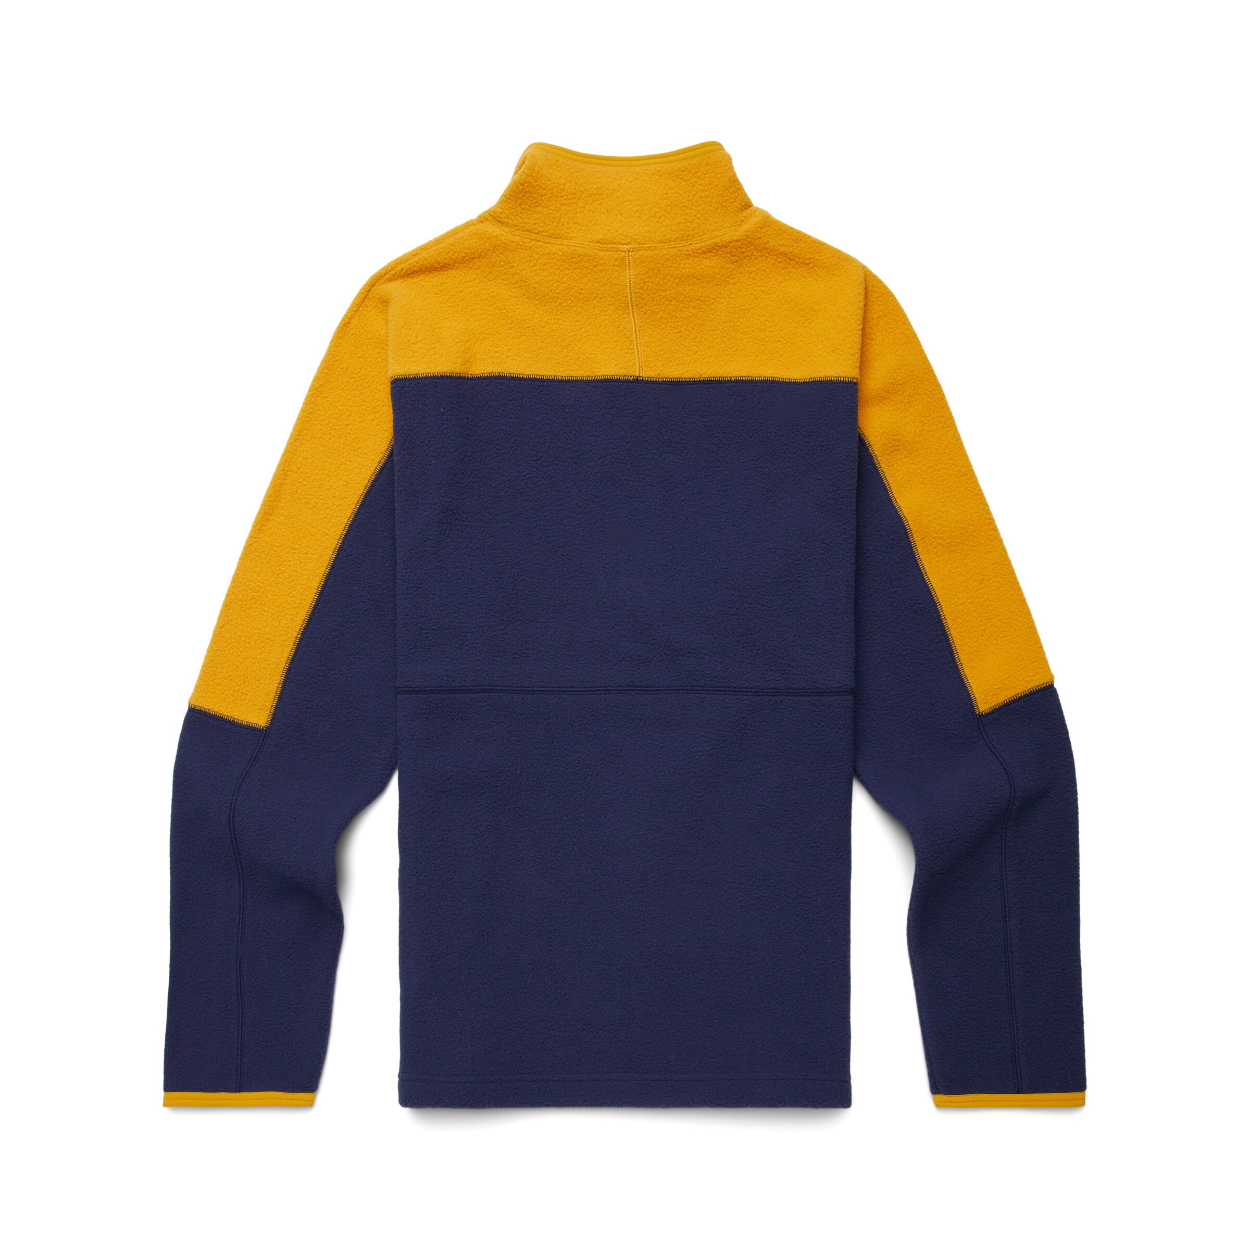 Abrazo Fleece Full-Zip Jacket men, amber/maritime